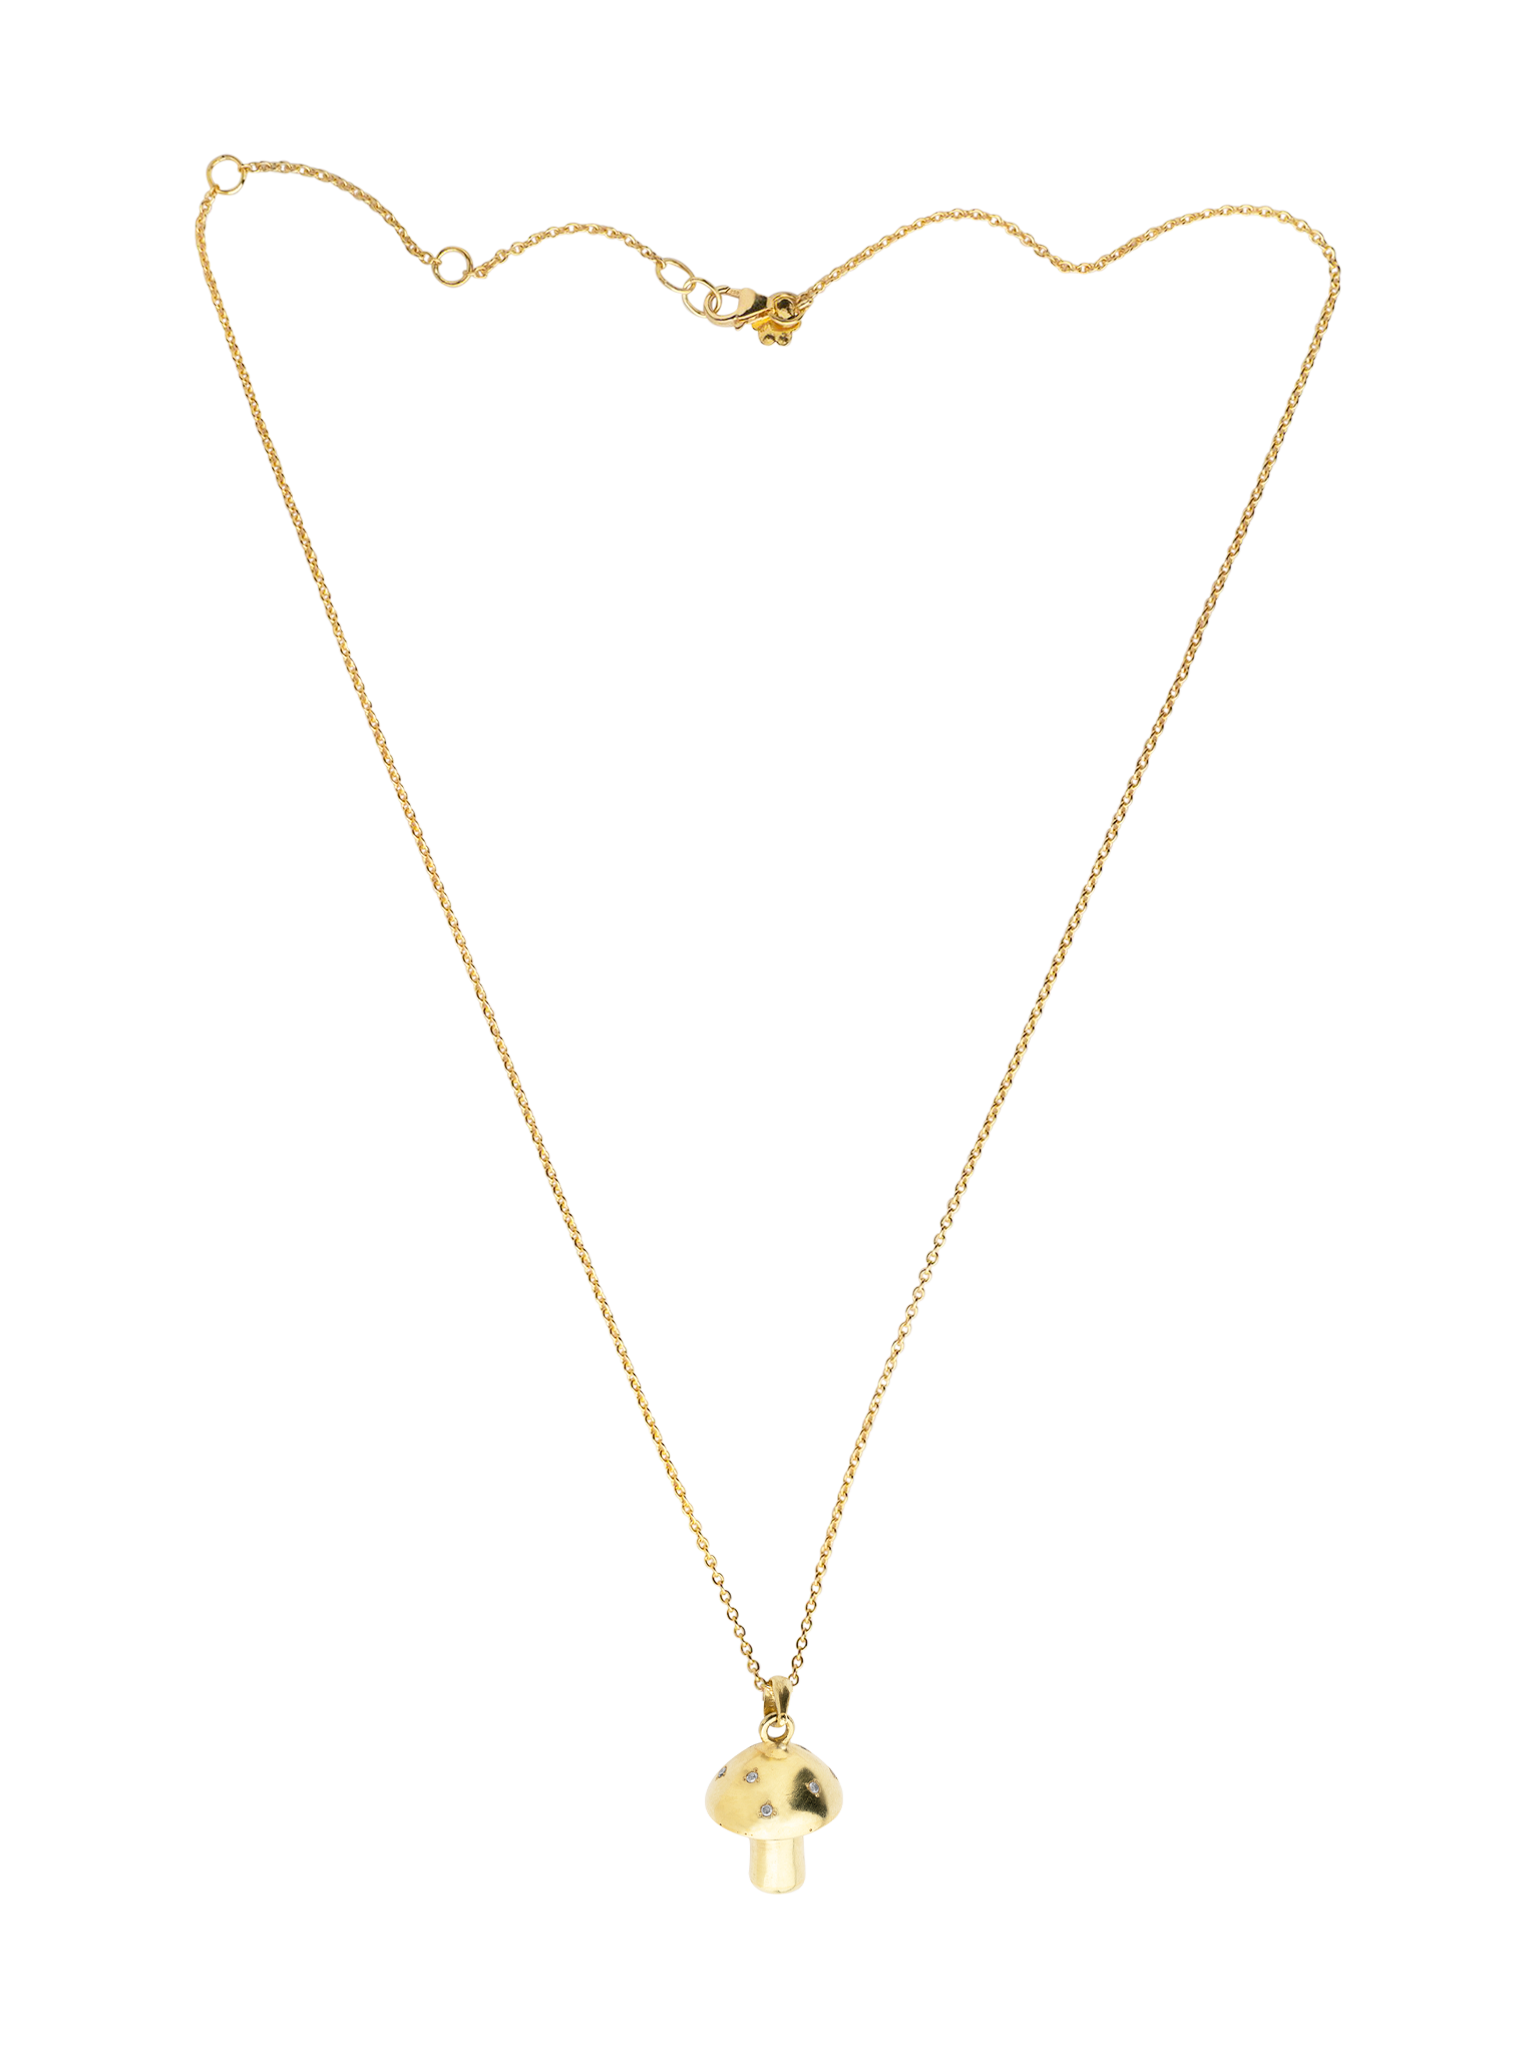 Small diamond toadstool necklace